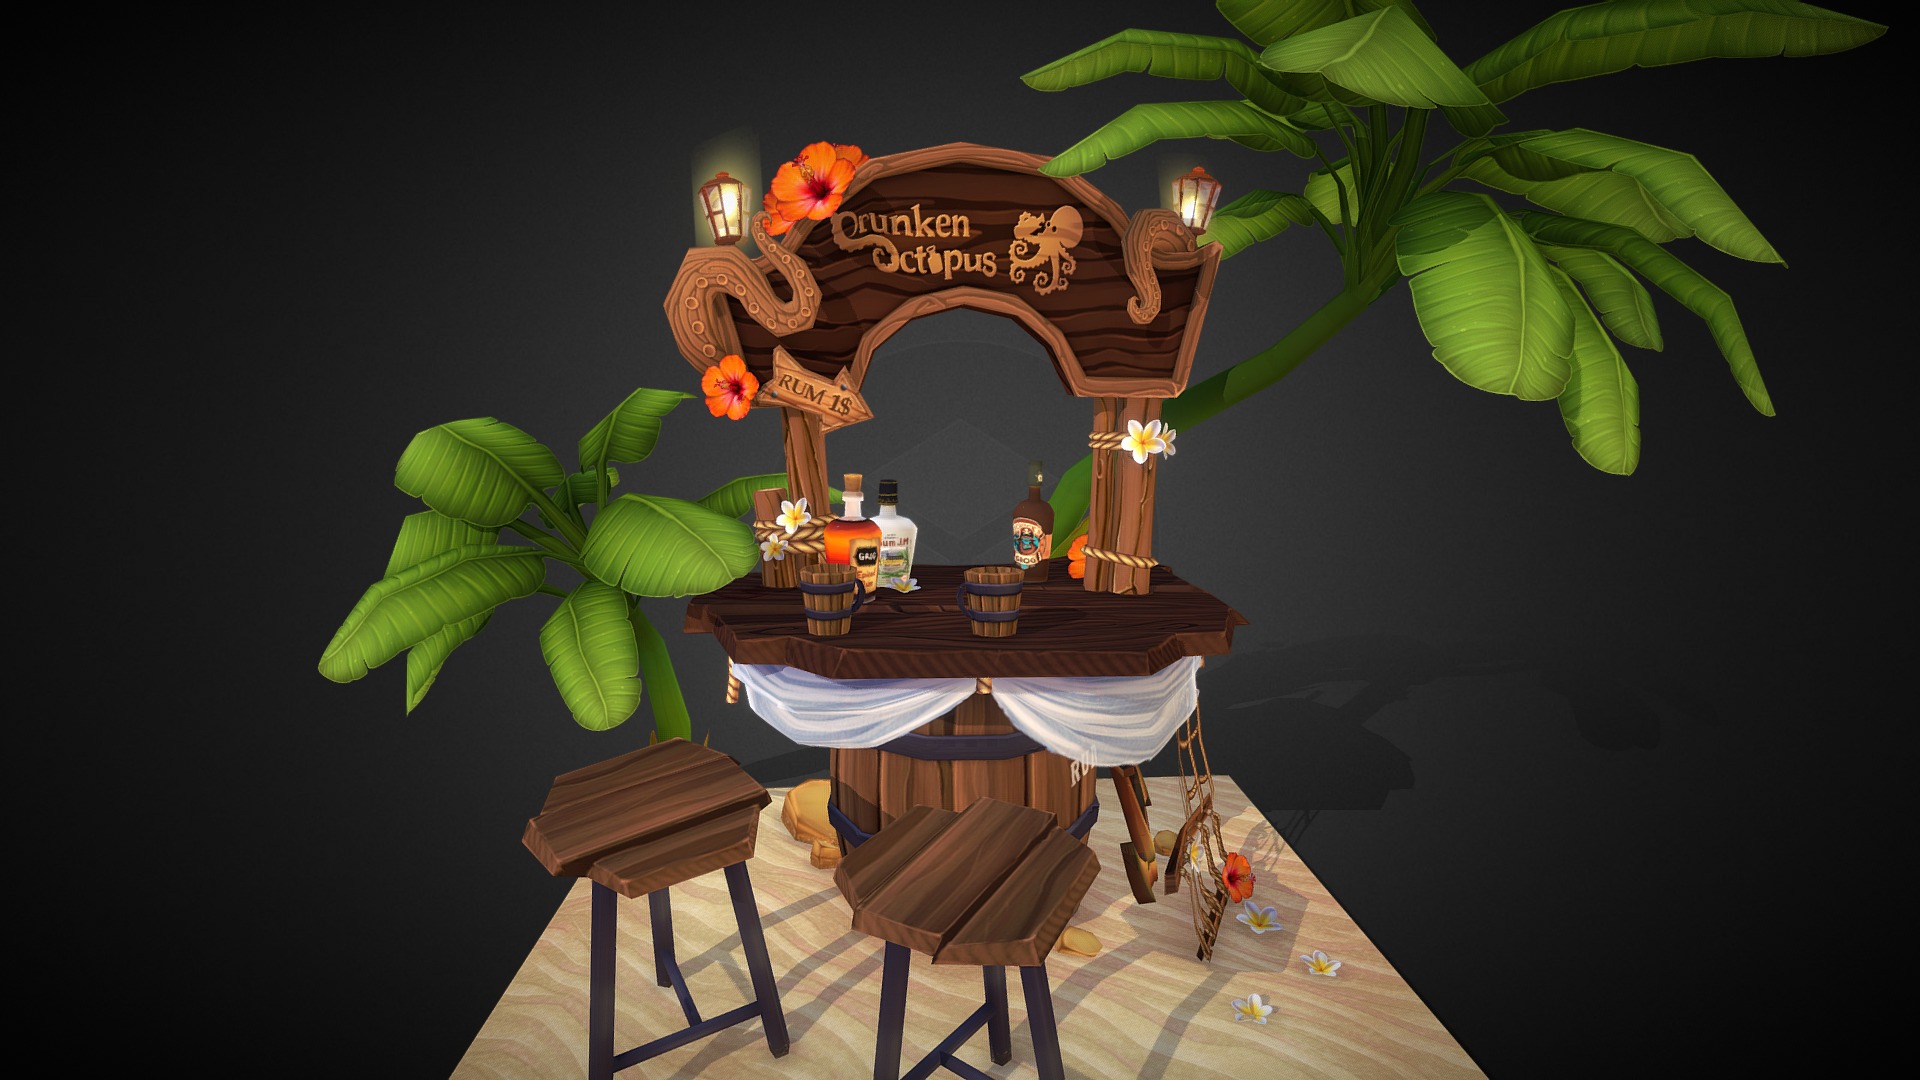 Yoho yoho and a bottle of rum!
(more infos on my Deviantart) - Rum stand - 3D model by Emeryl (@elo-doudoune) 3d model